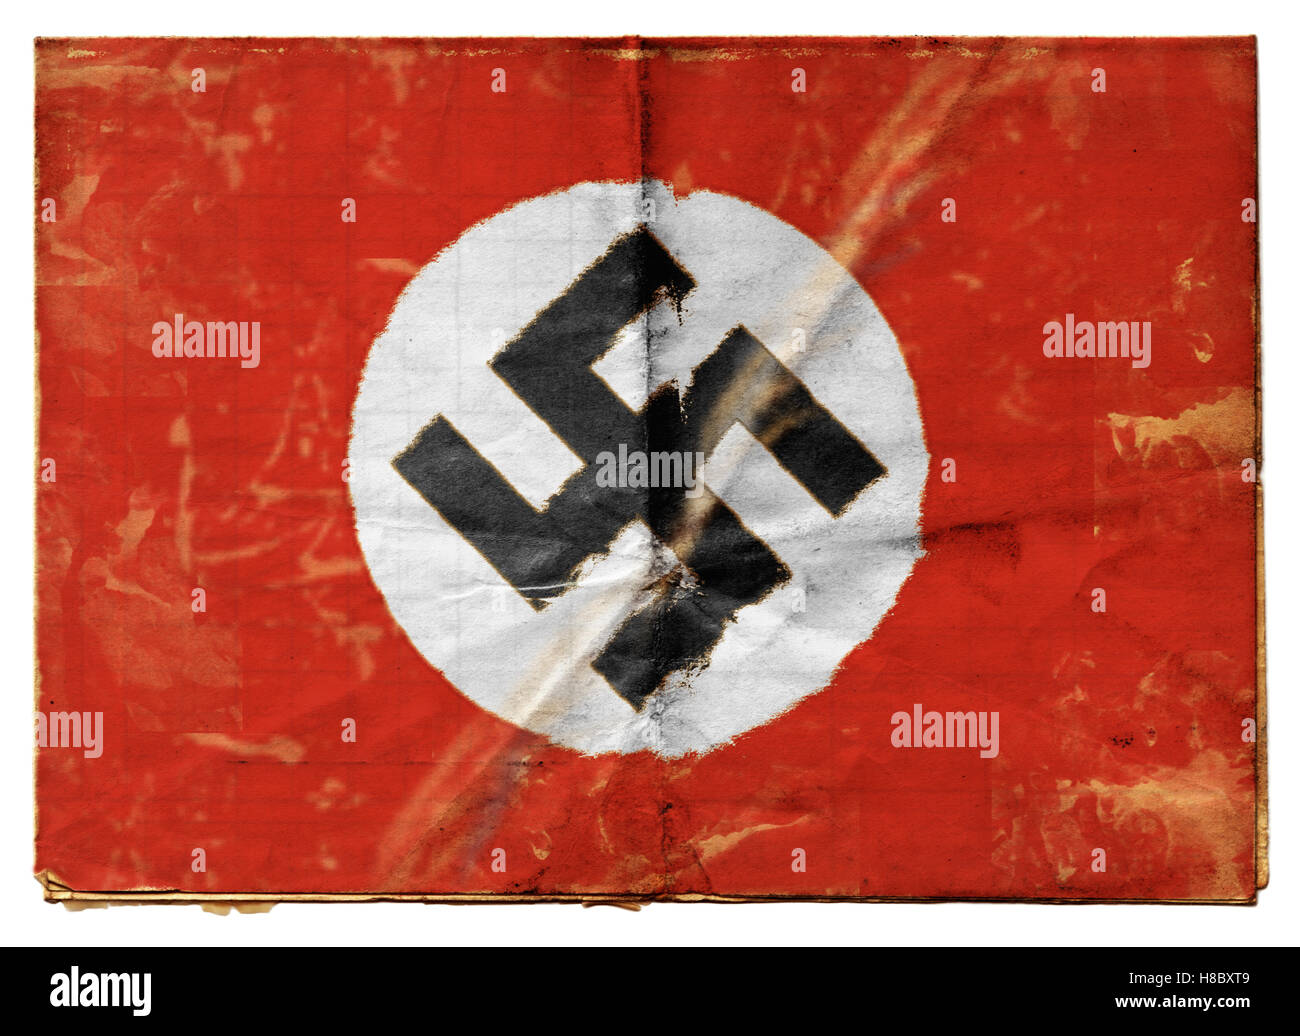 The flag of Nazi Germany. Stock Photo